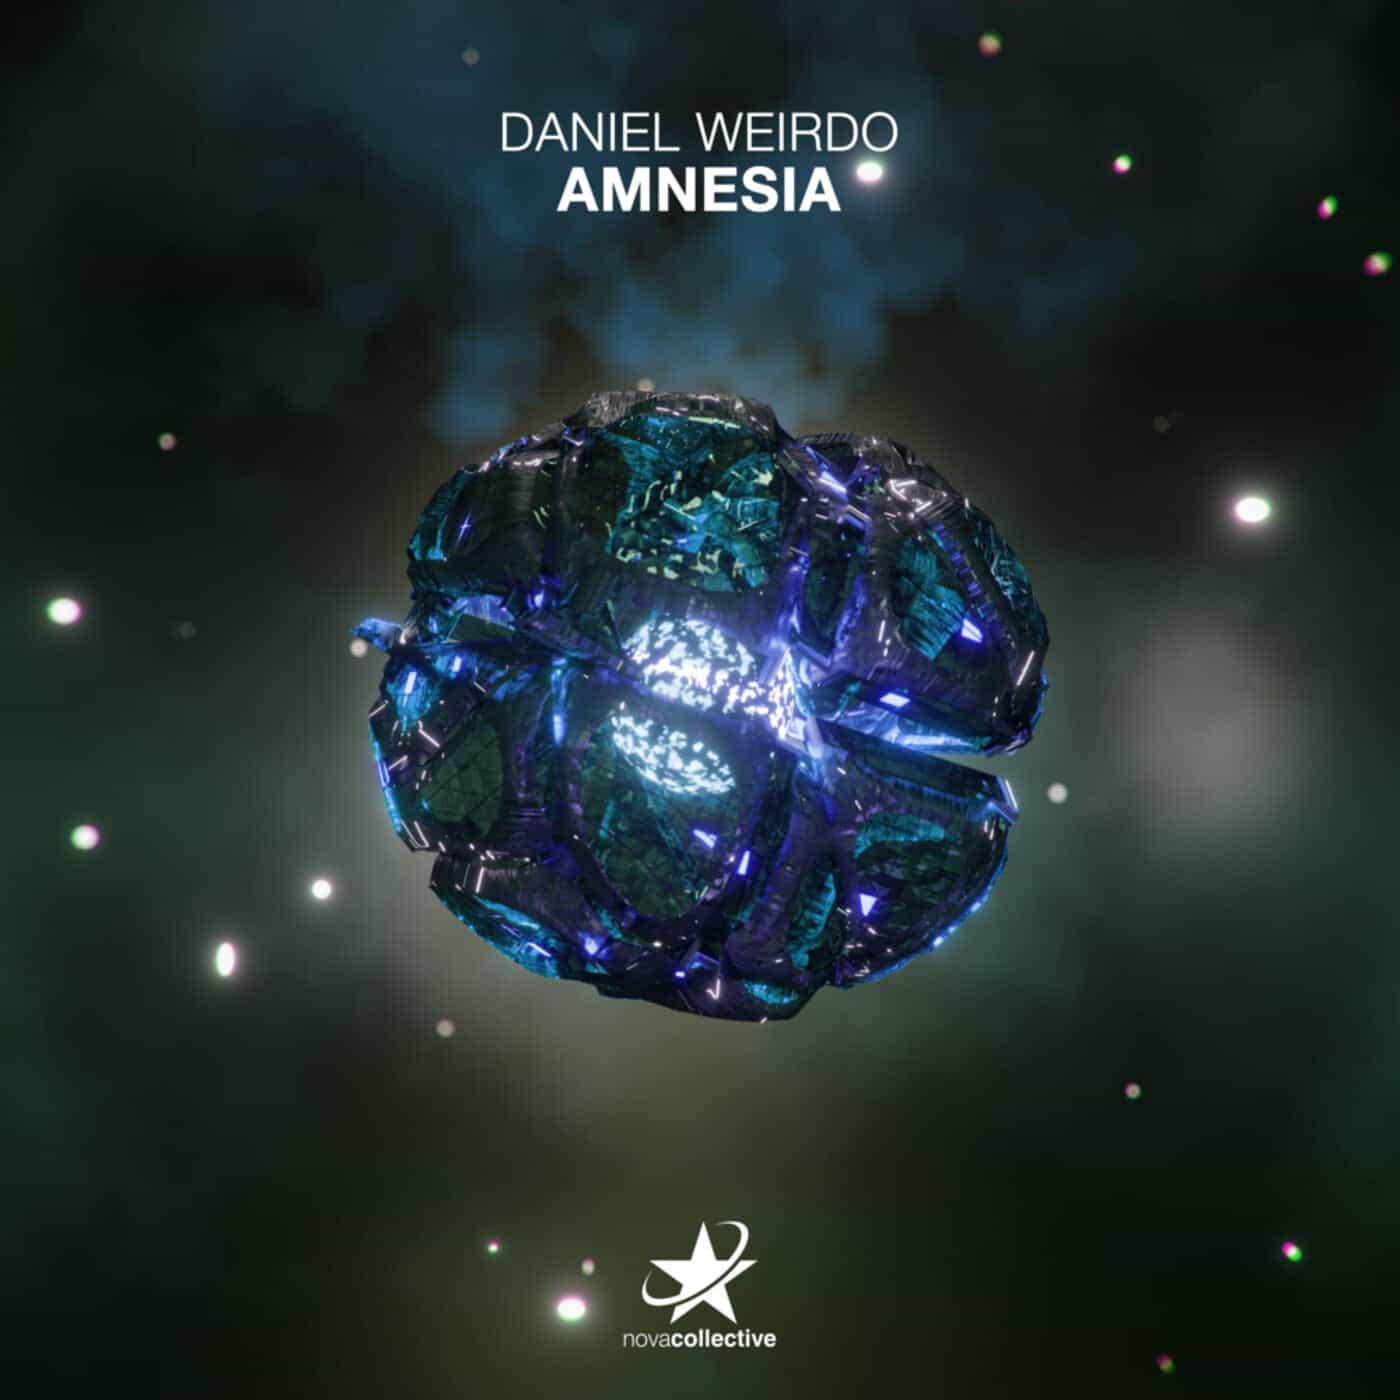 image cover: Daniel Weirdo - Amnesia (Extended Mix) by Nova Collective